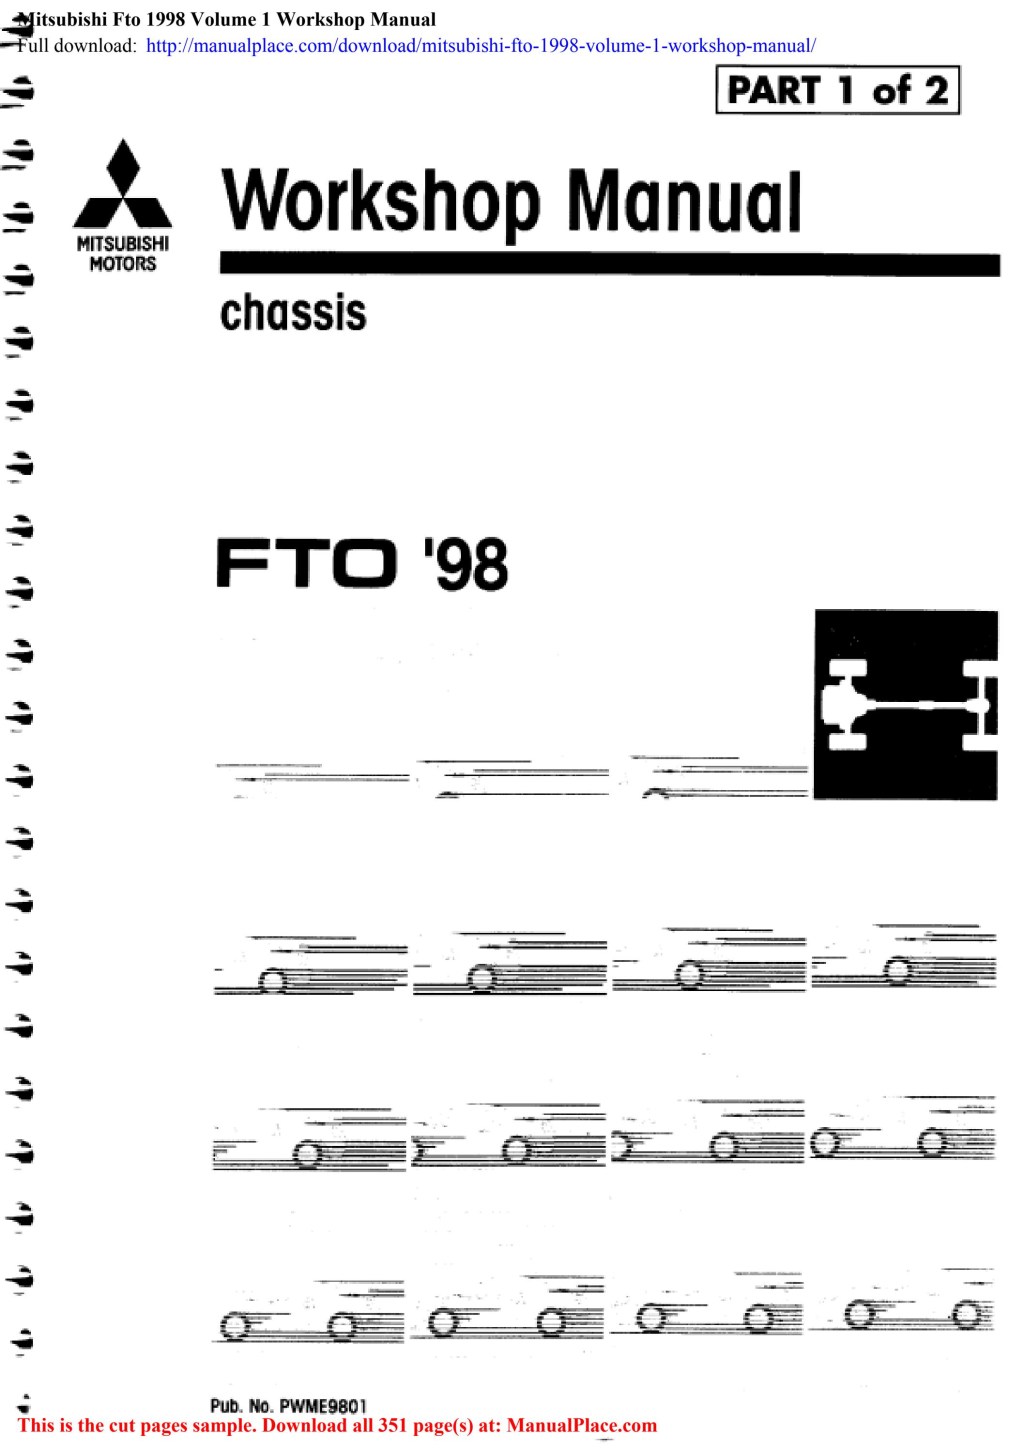 Picture of: Mitsubishi Fto  Volume  Workshop Manual by NancyShanksh – Issuu